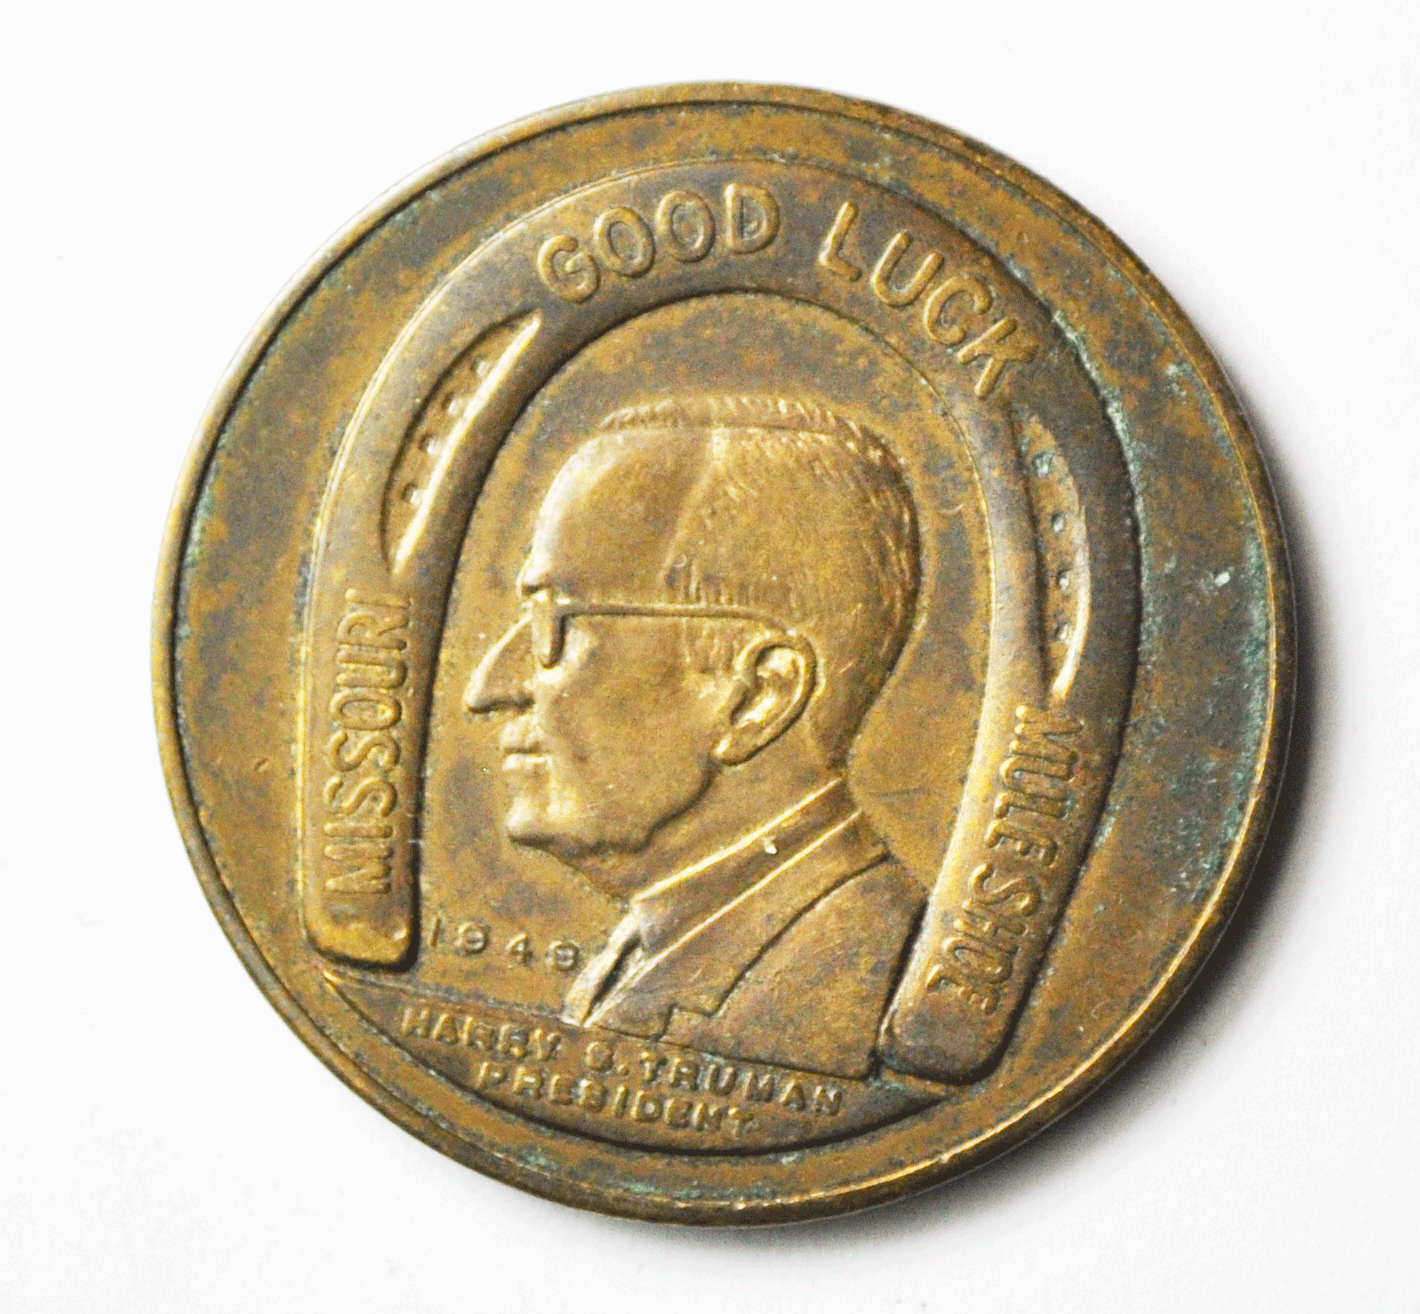 Harry Truman Copper Good Luck Mule Shoe Foundation Medal 29mm